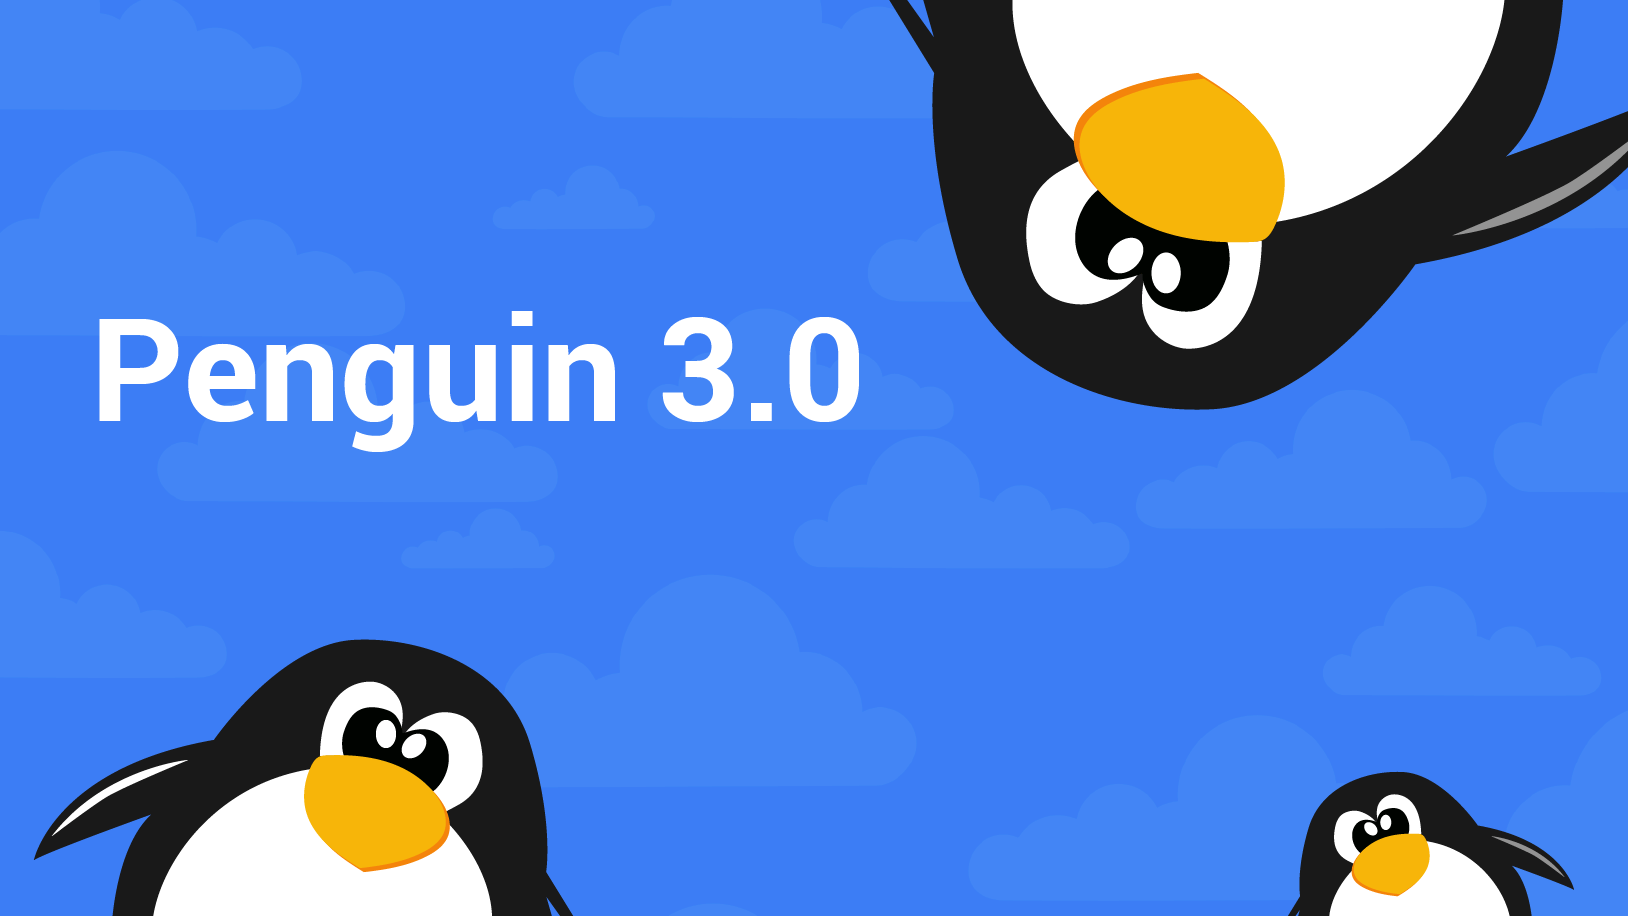 Google Penguin 3.0 update